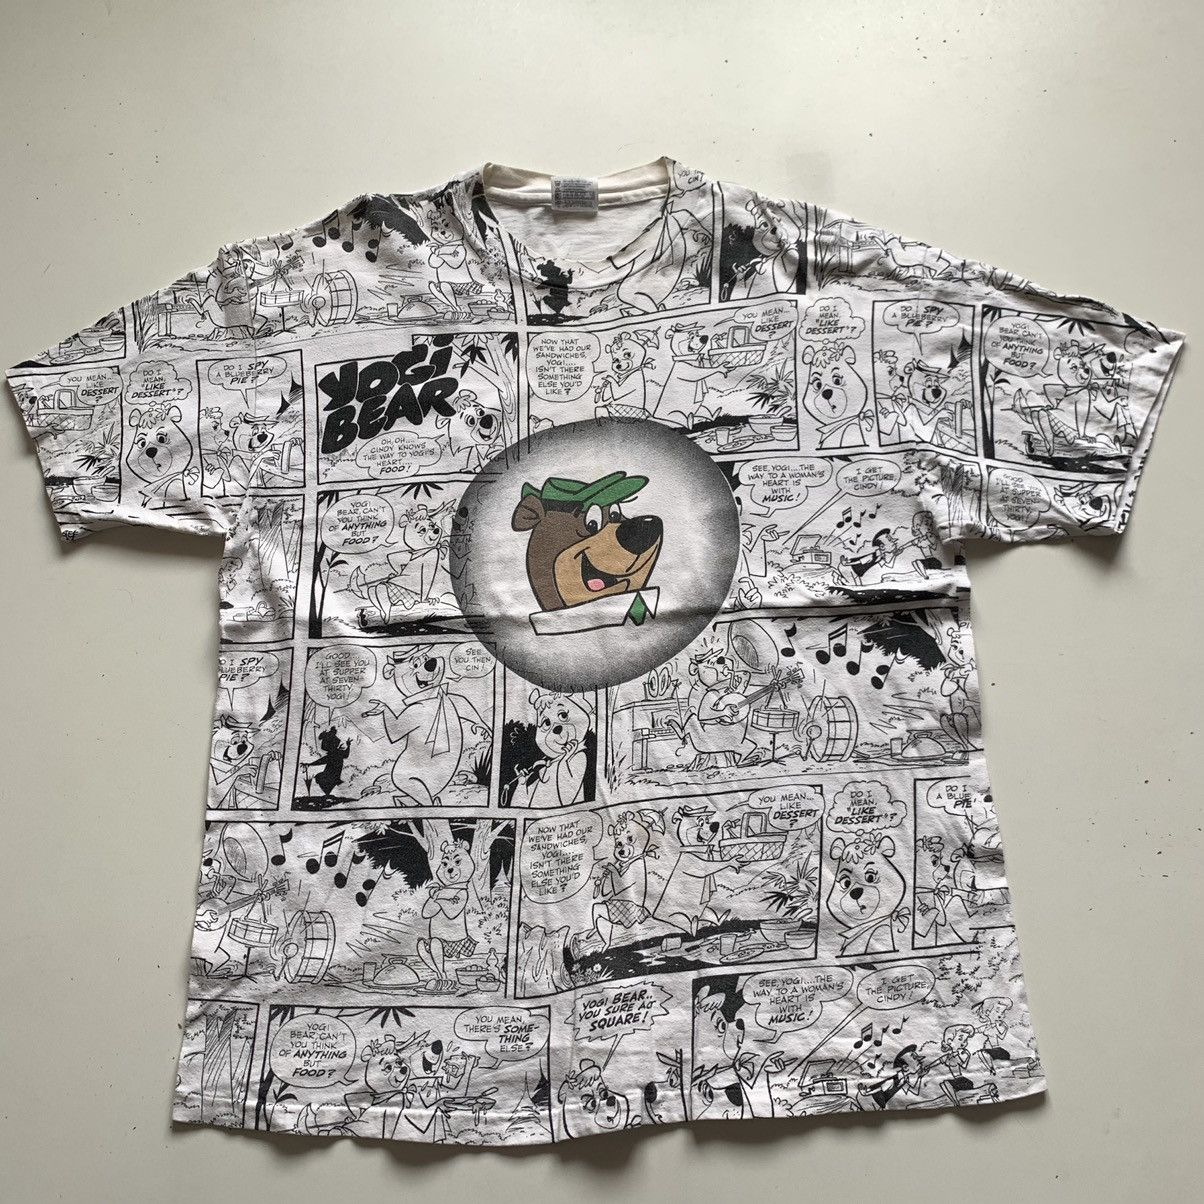 Vintage 90s Yogi Bear Tshirt Cartoon Network Single Stitch Rare Size XL